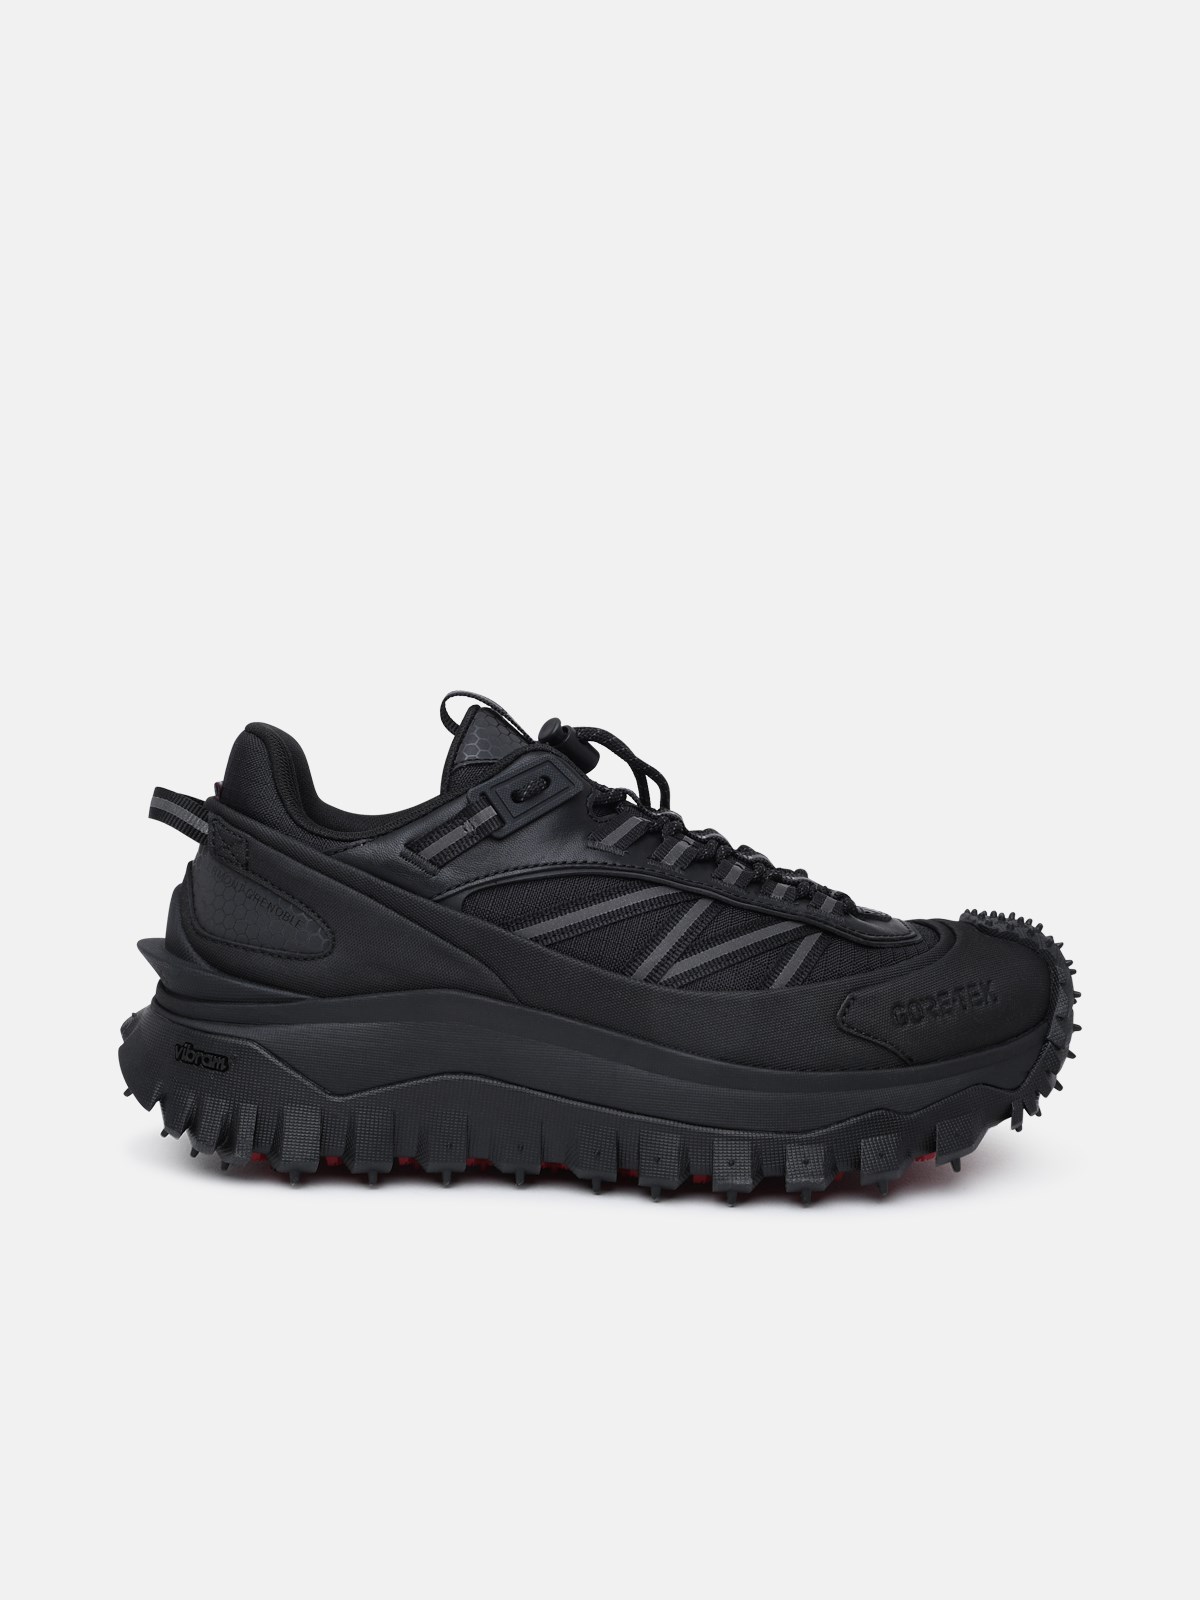 Moncler Black Nylon Sneakers